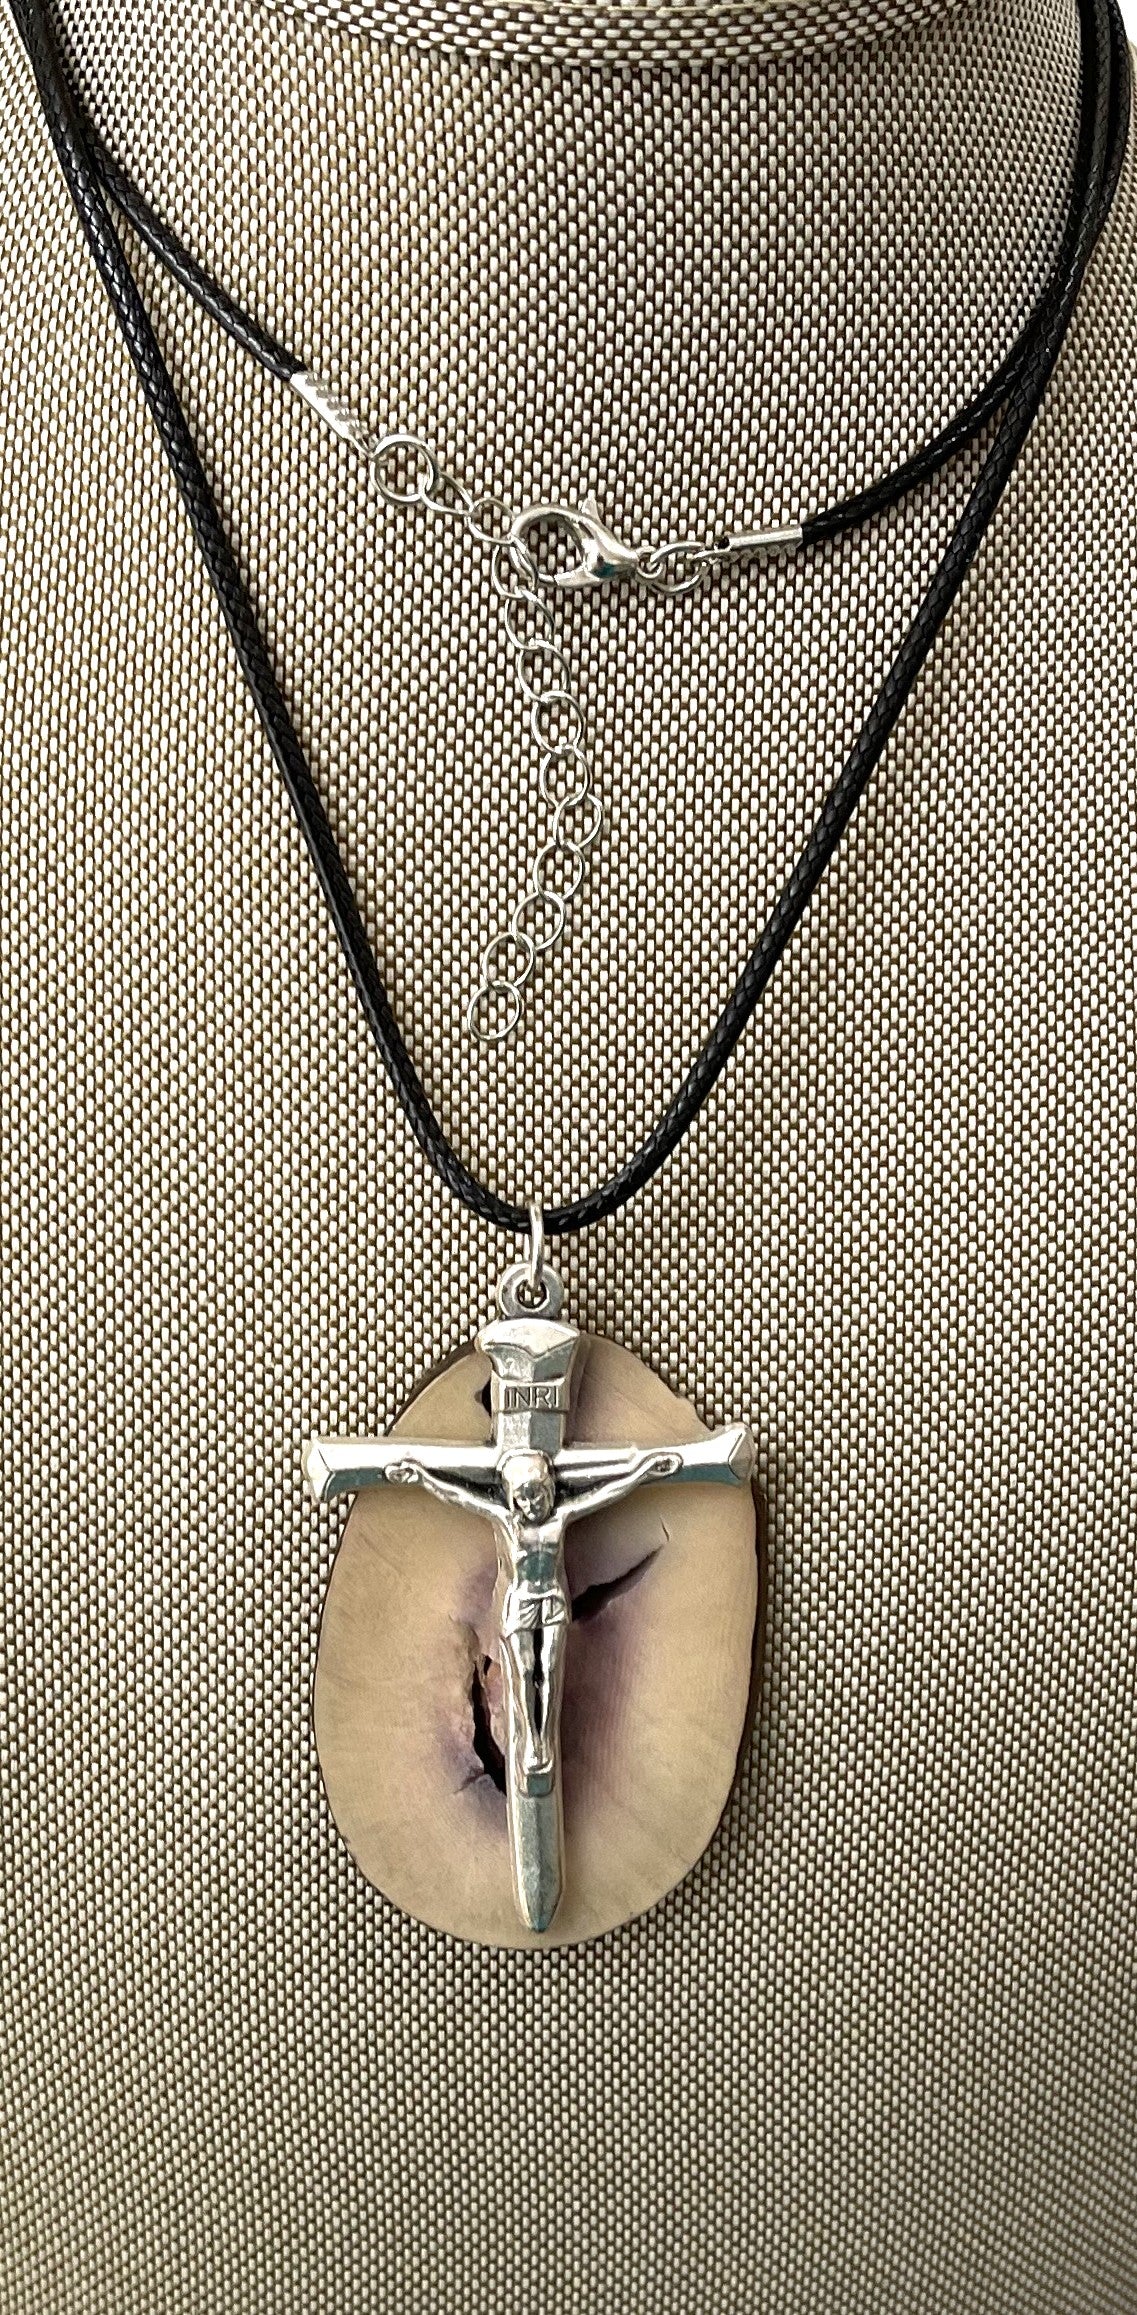 Christian Cross Metal On Tagua Necklace Pendant Panama